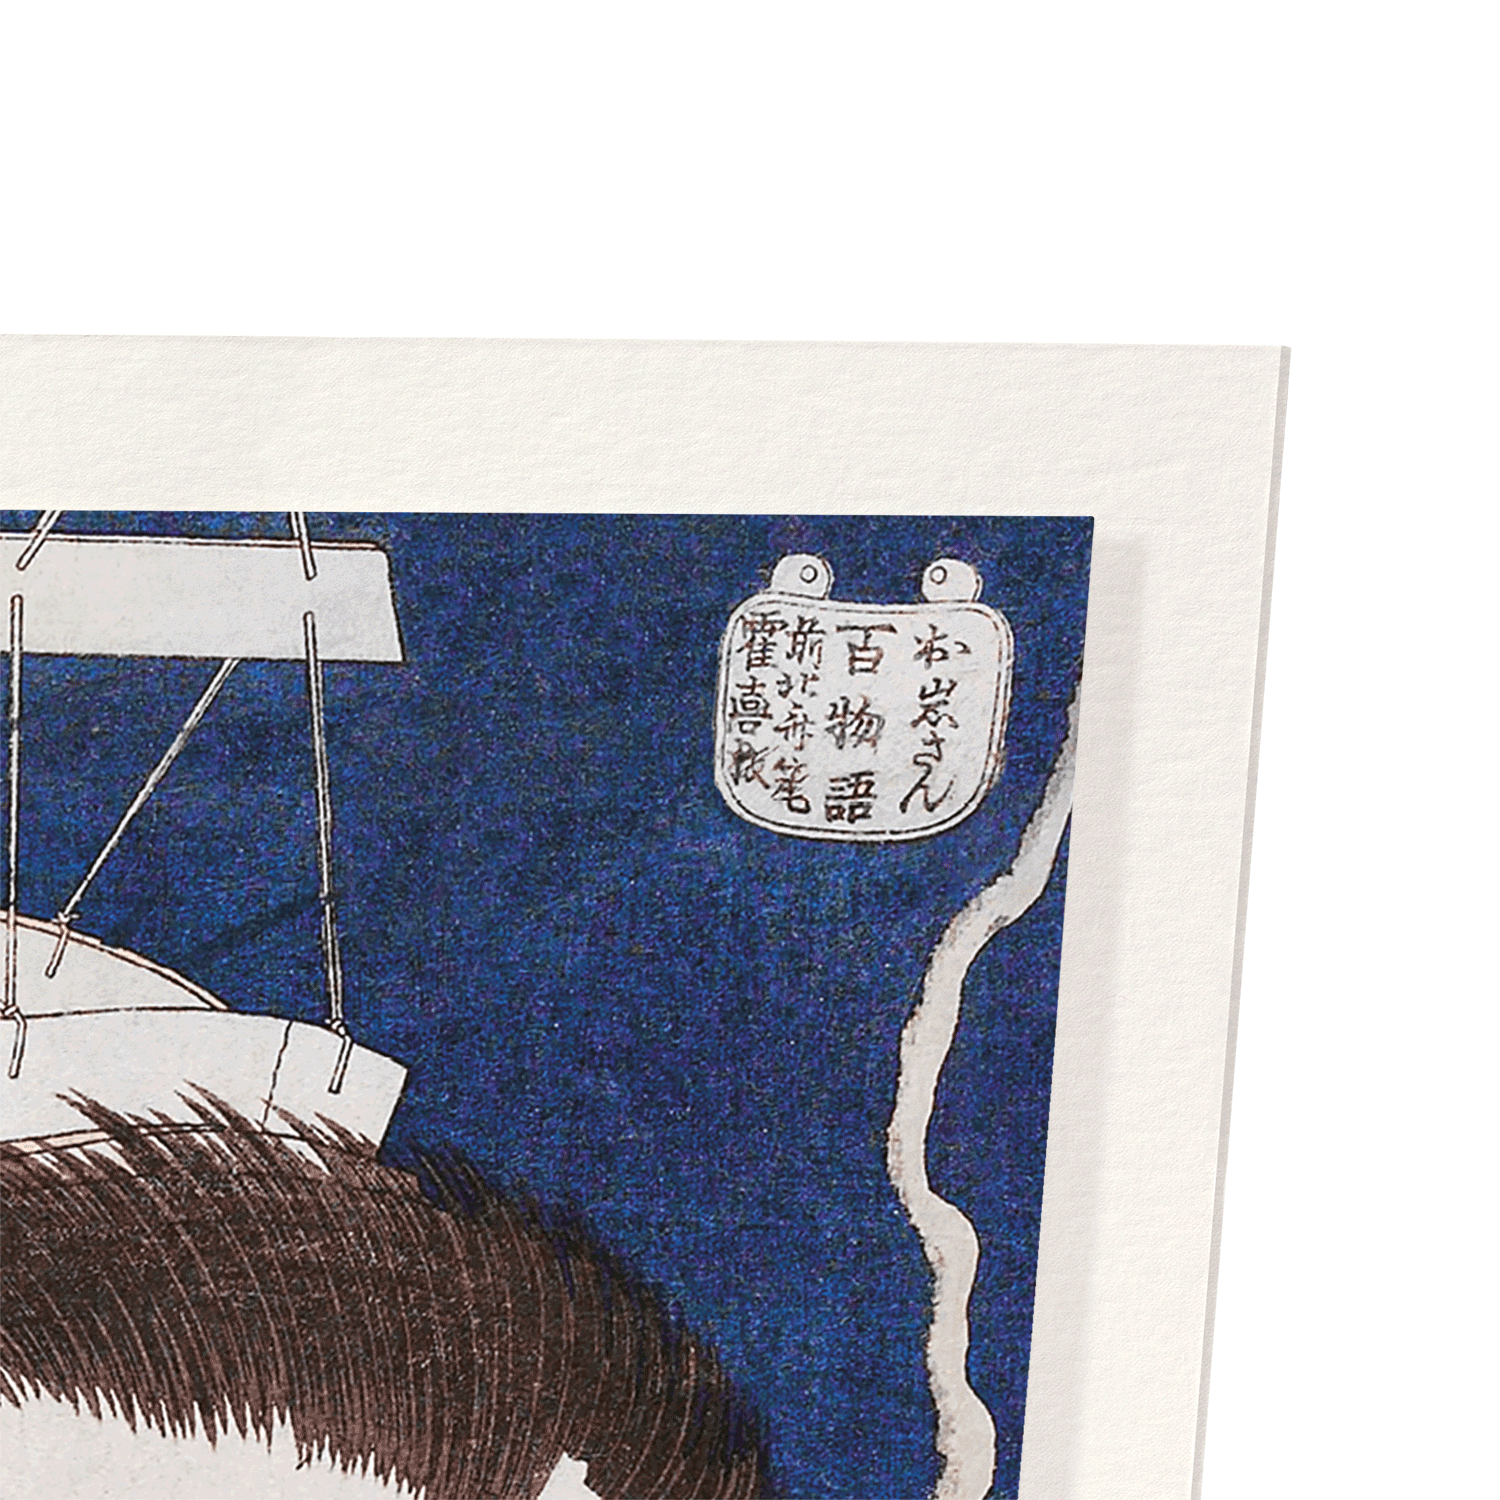 LANTERN GHOST: Japanese Art Print